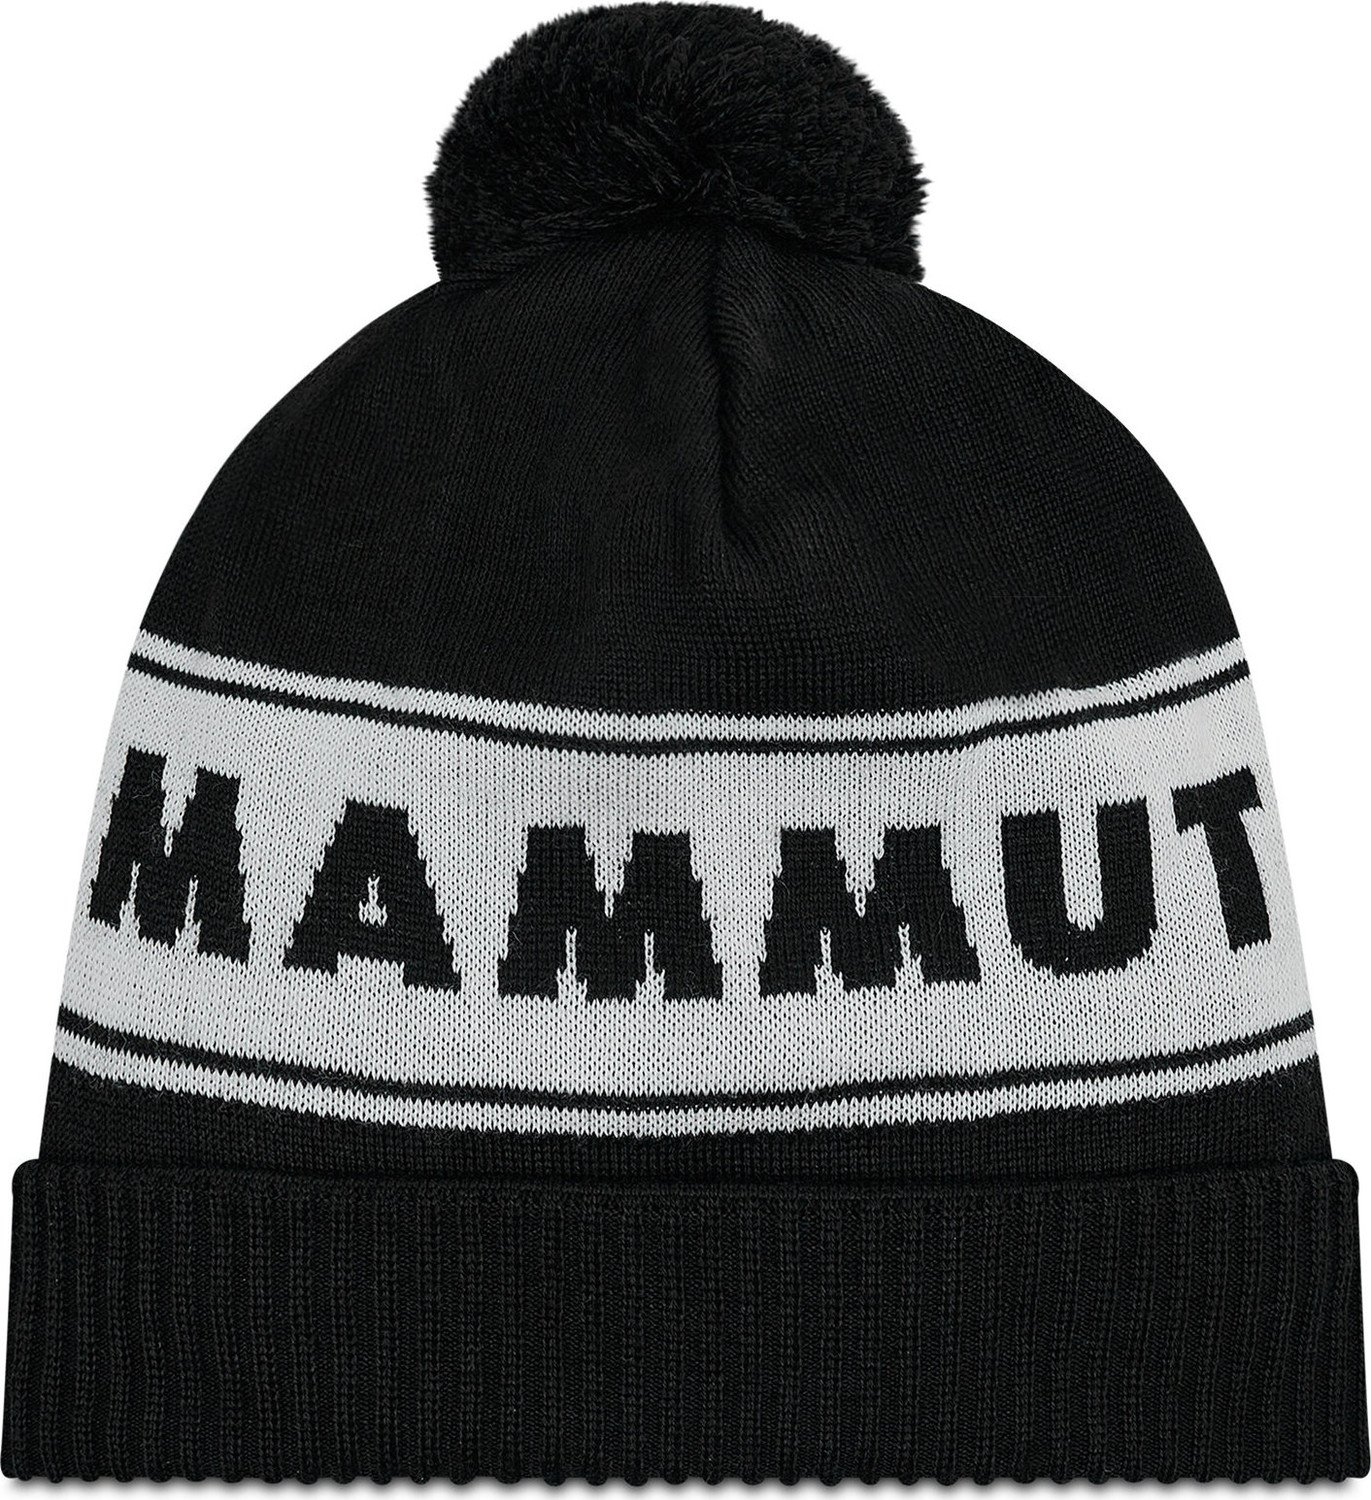 Čepice Mammut Peaks Beanie 1191-01100-0047-1 Black/White